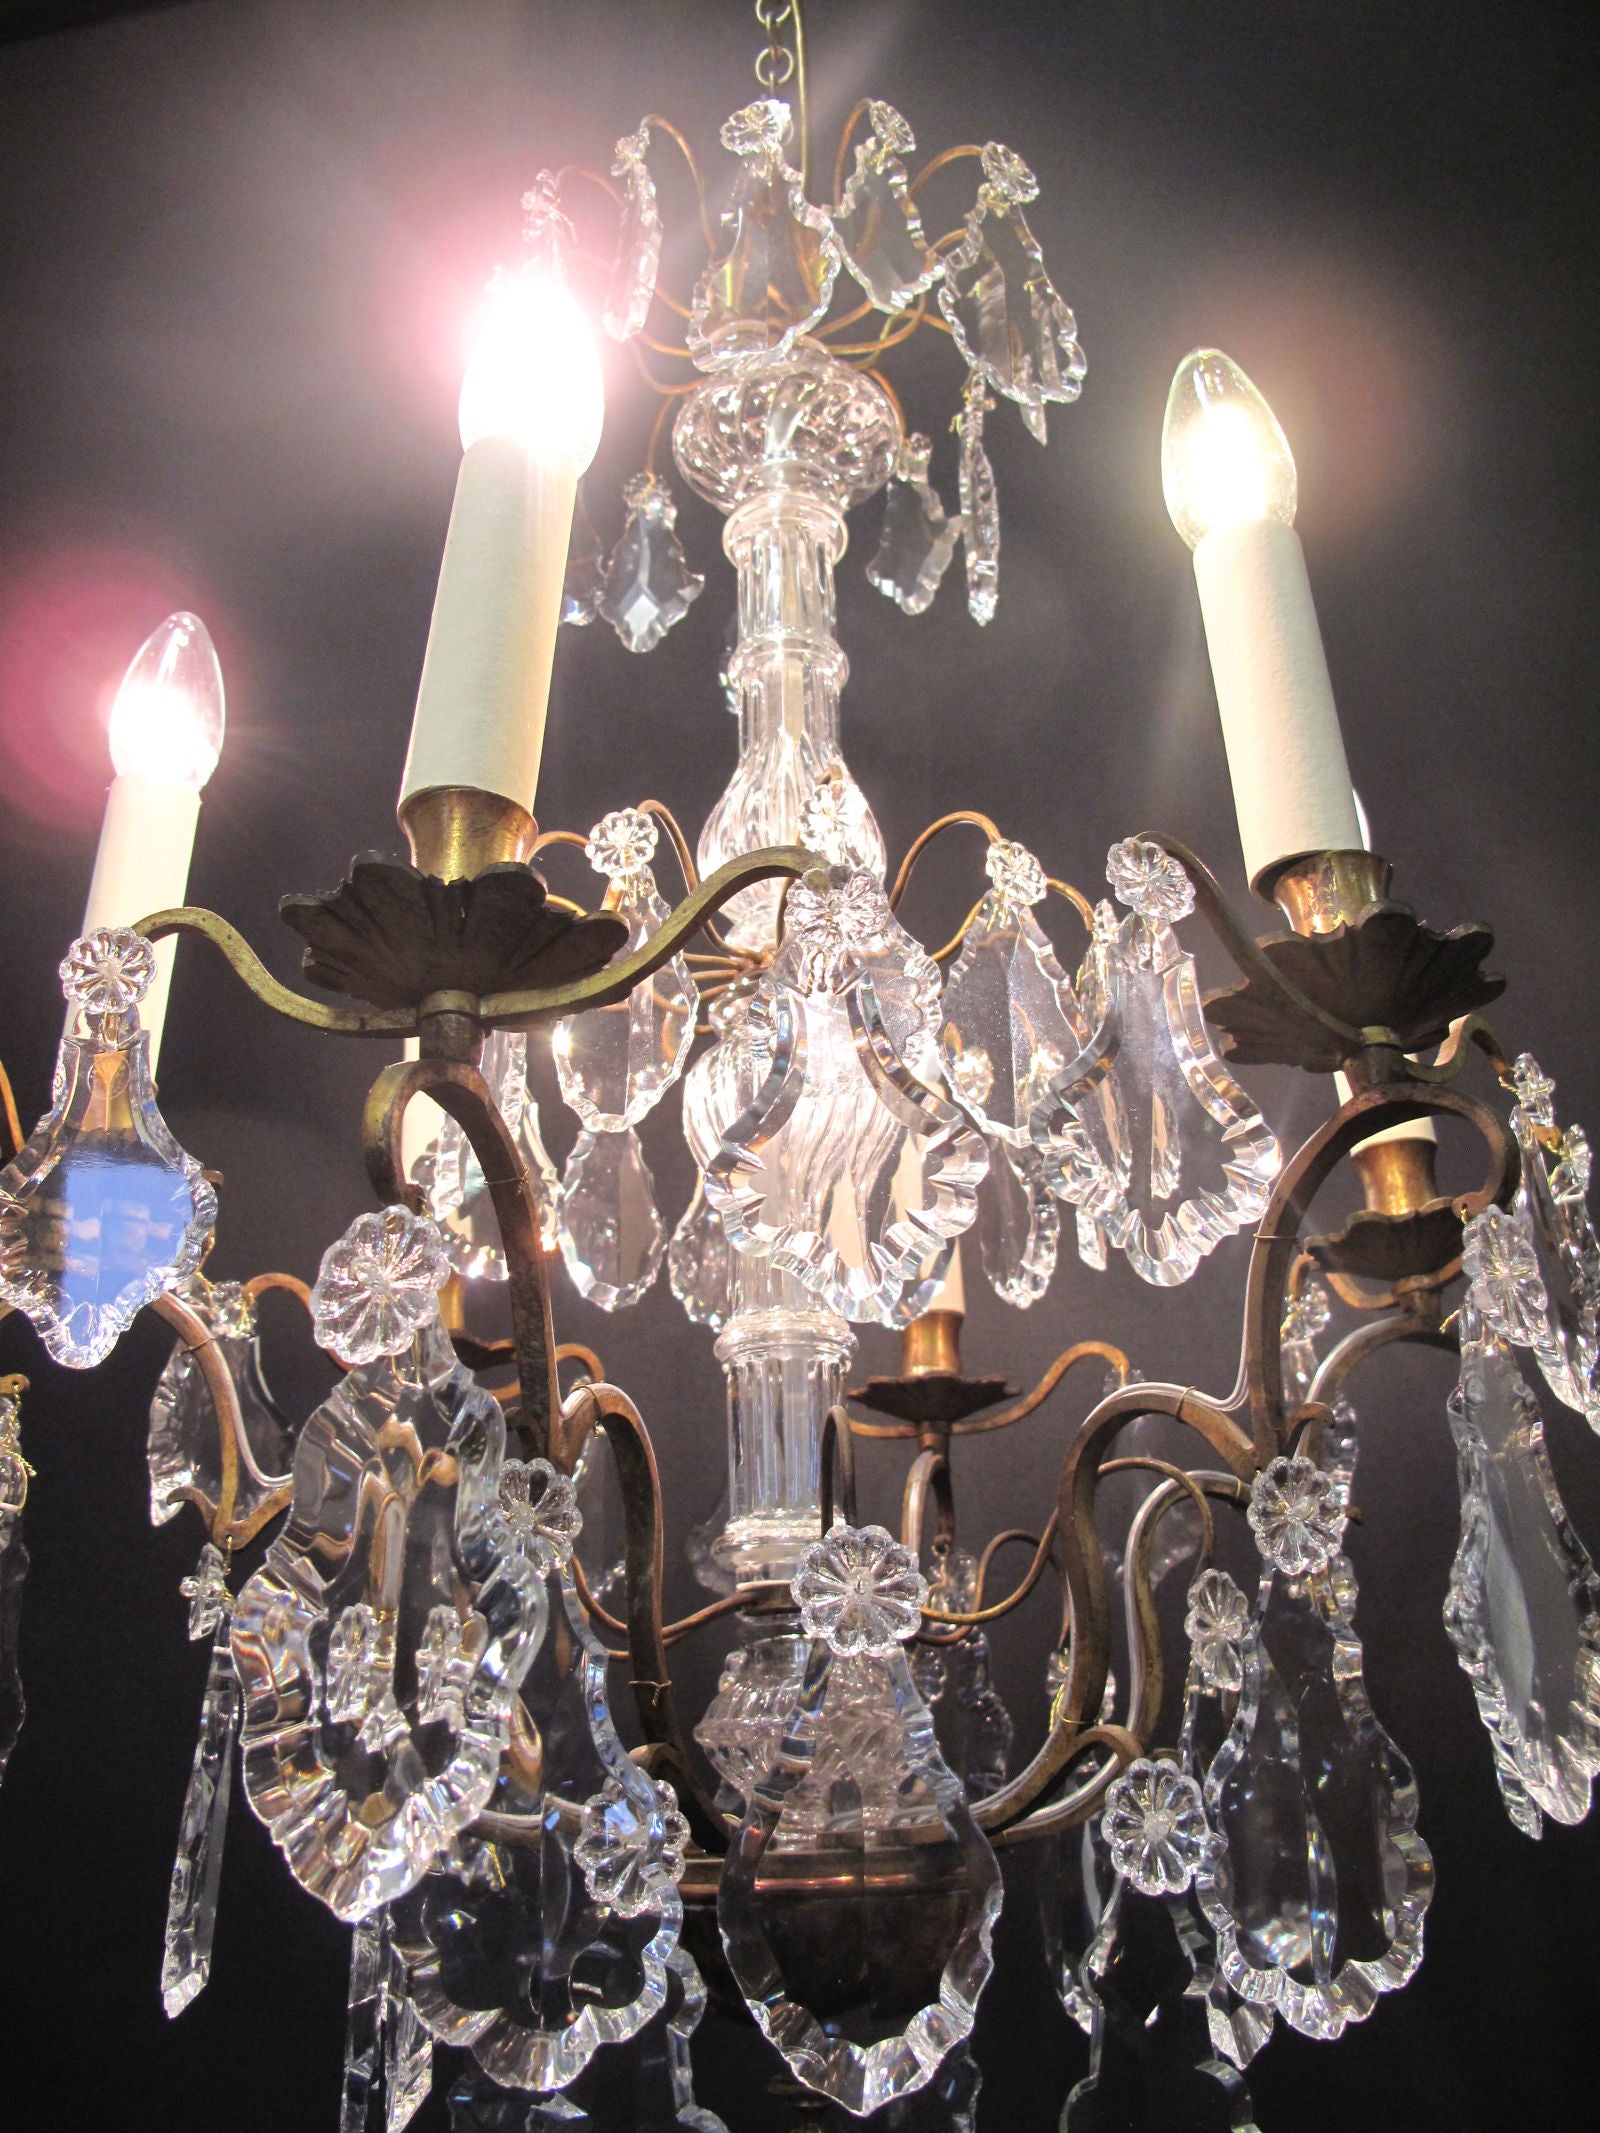 chandelier lit up close in